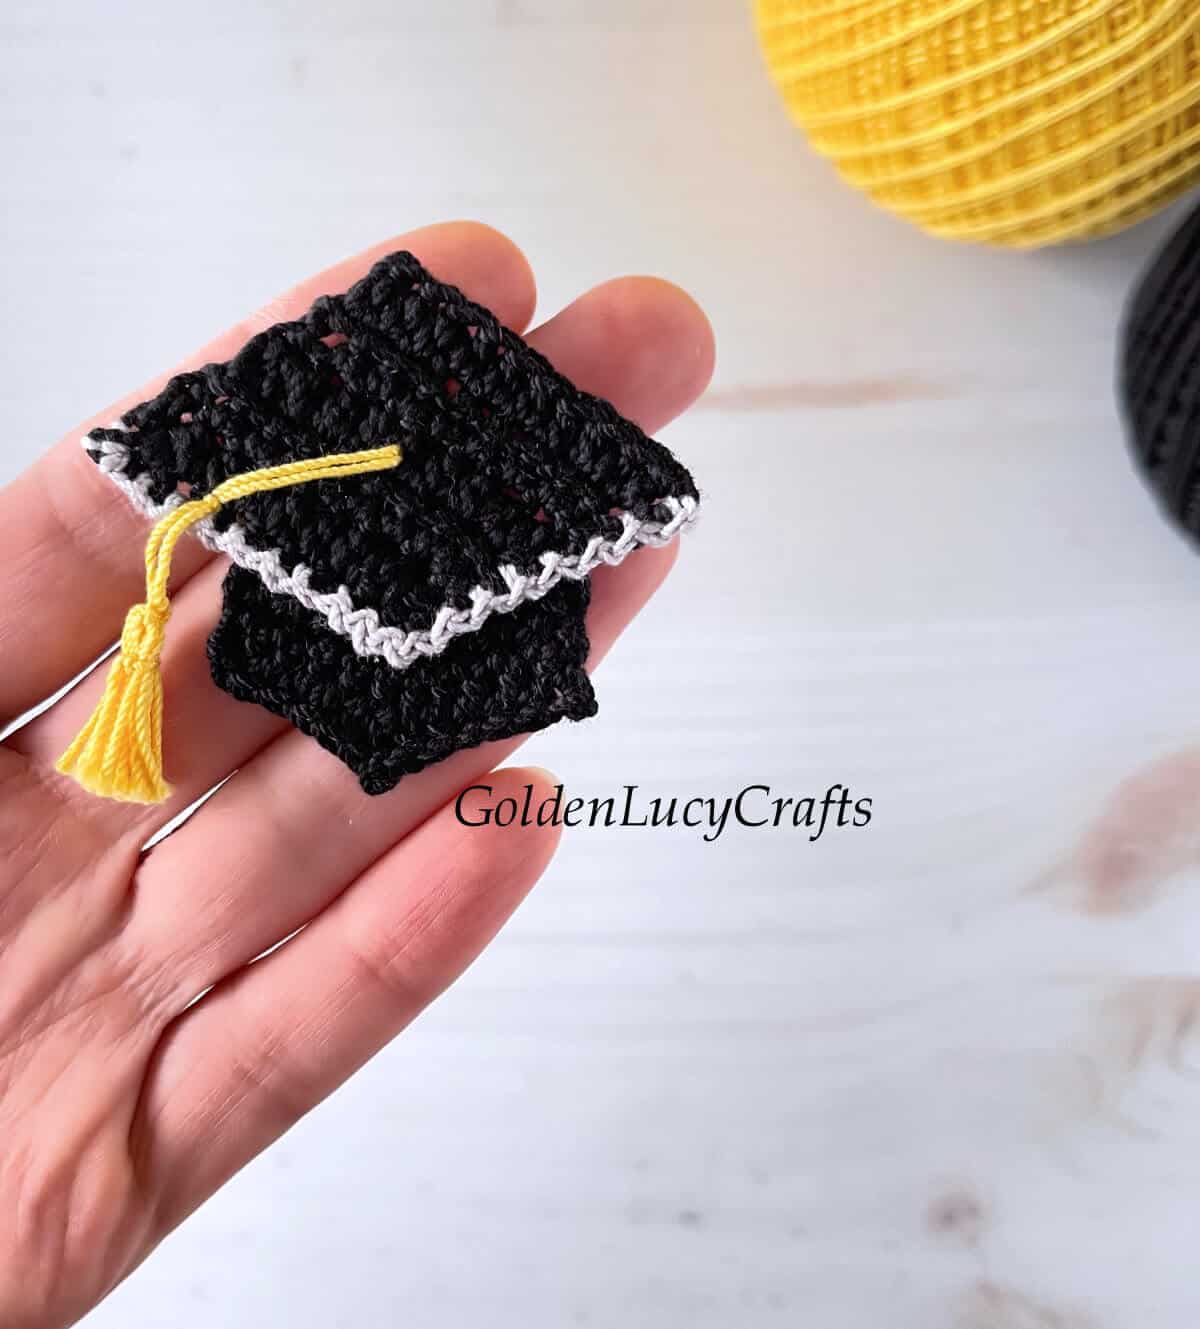 Crochet graduation cap applique in the palm of a hand.